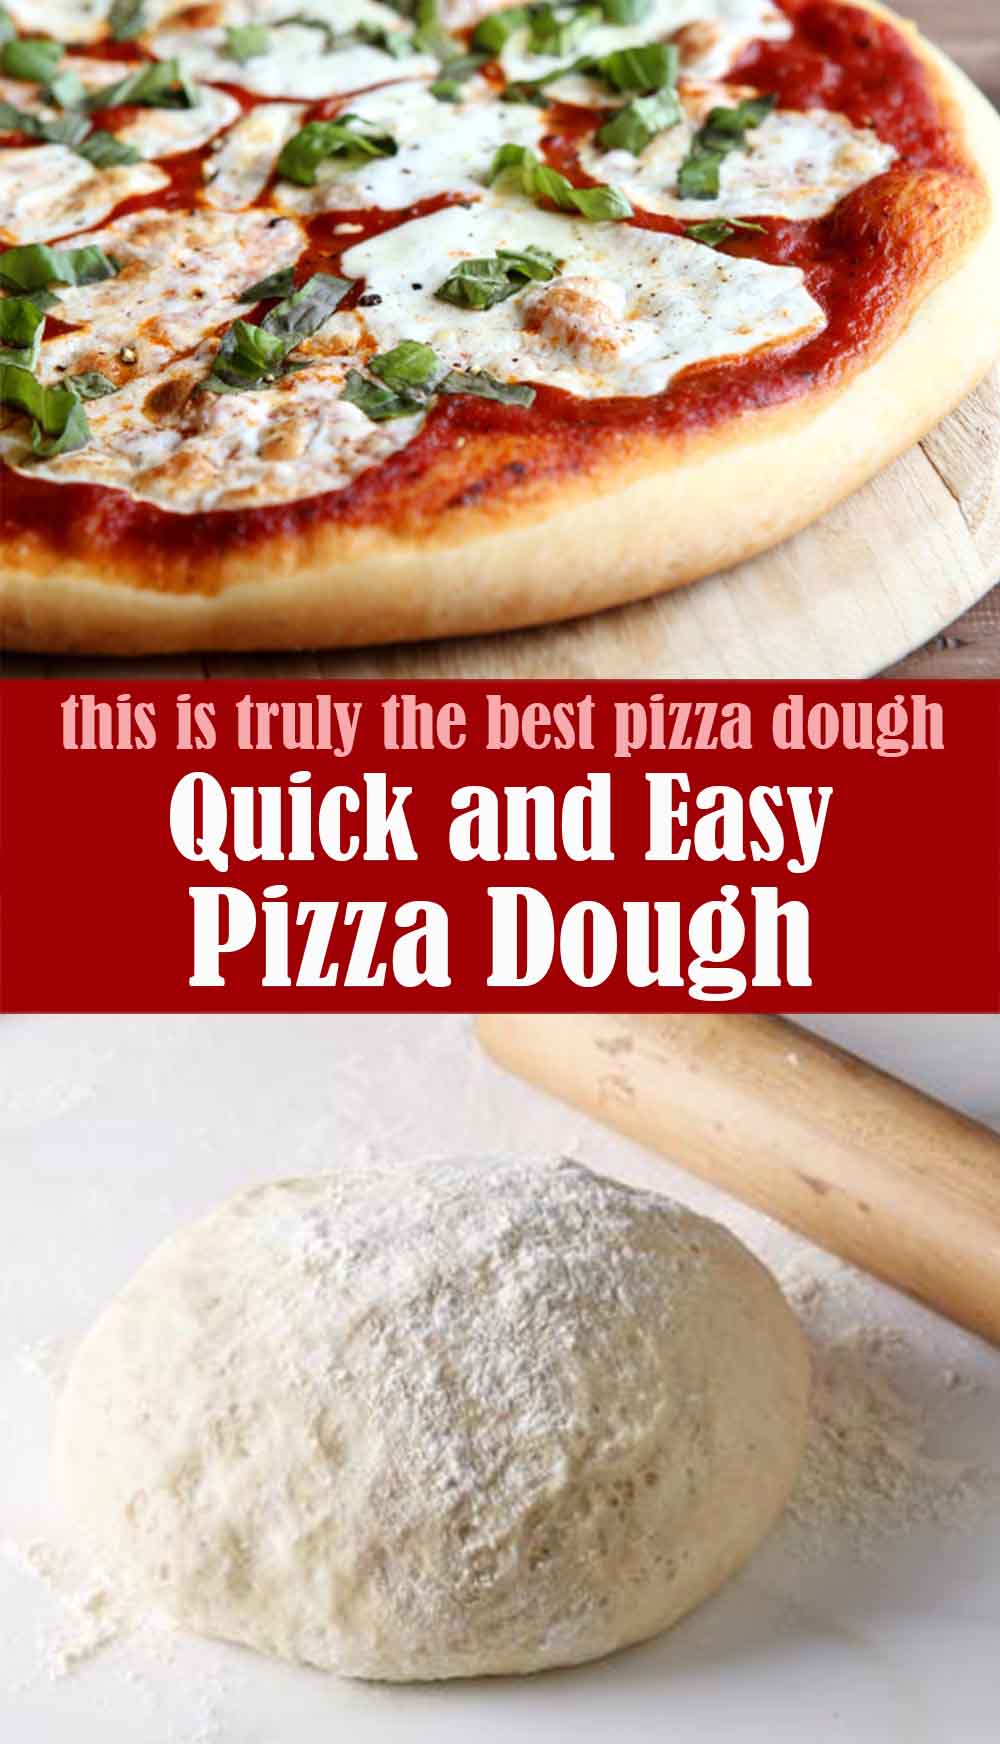 Quick and Easy Pizza Dough Recipe